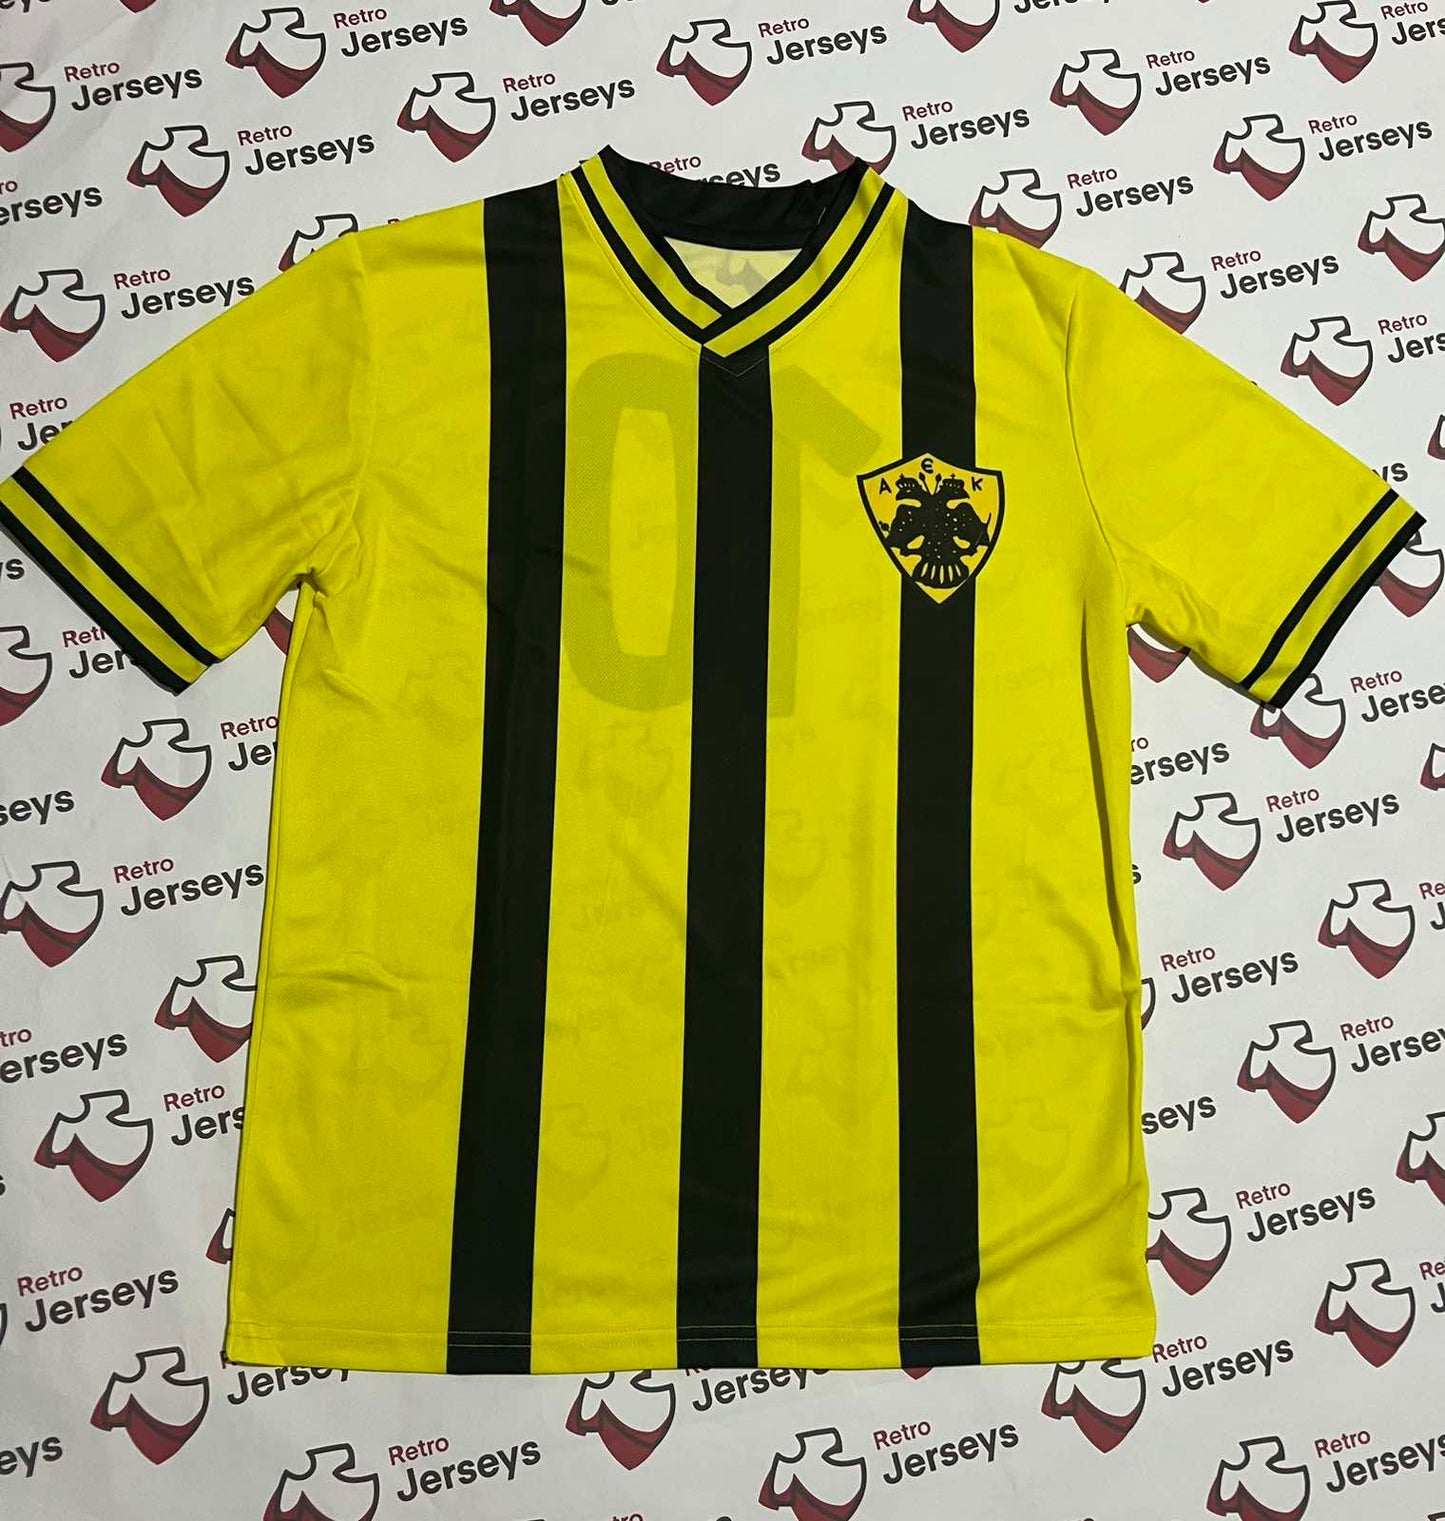 AEK Athens Shirt 1971-1972 Home - Retro Jerseys, φανέλα αεκ